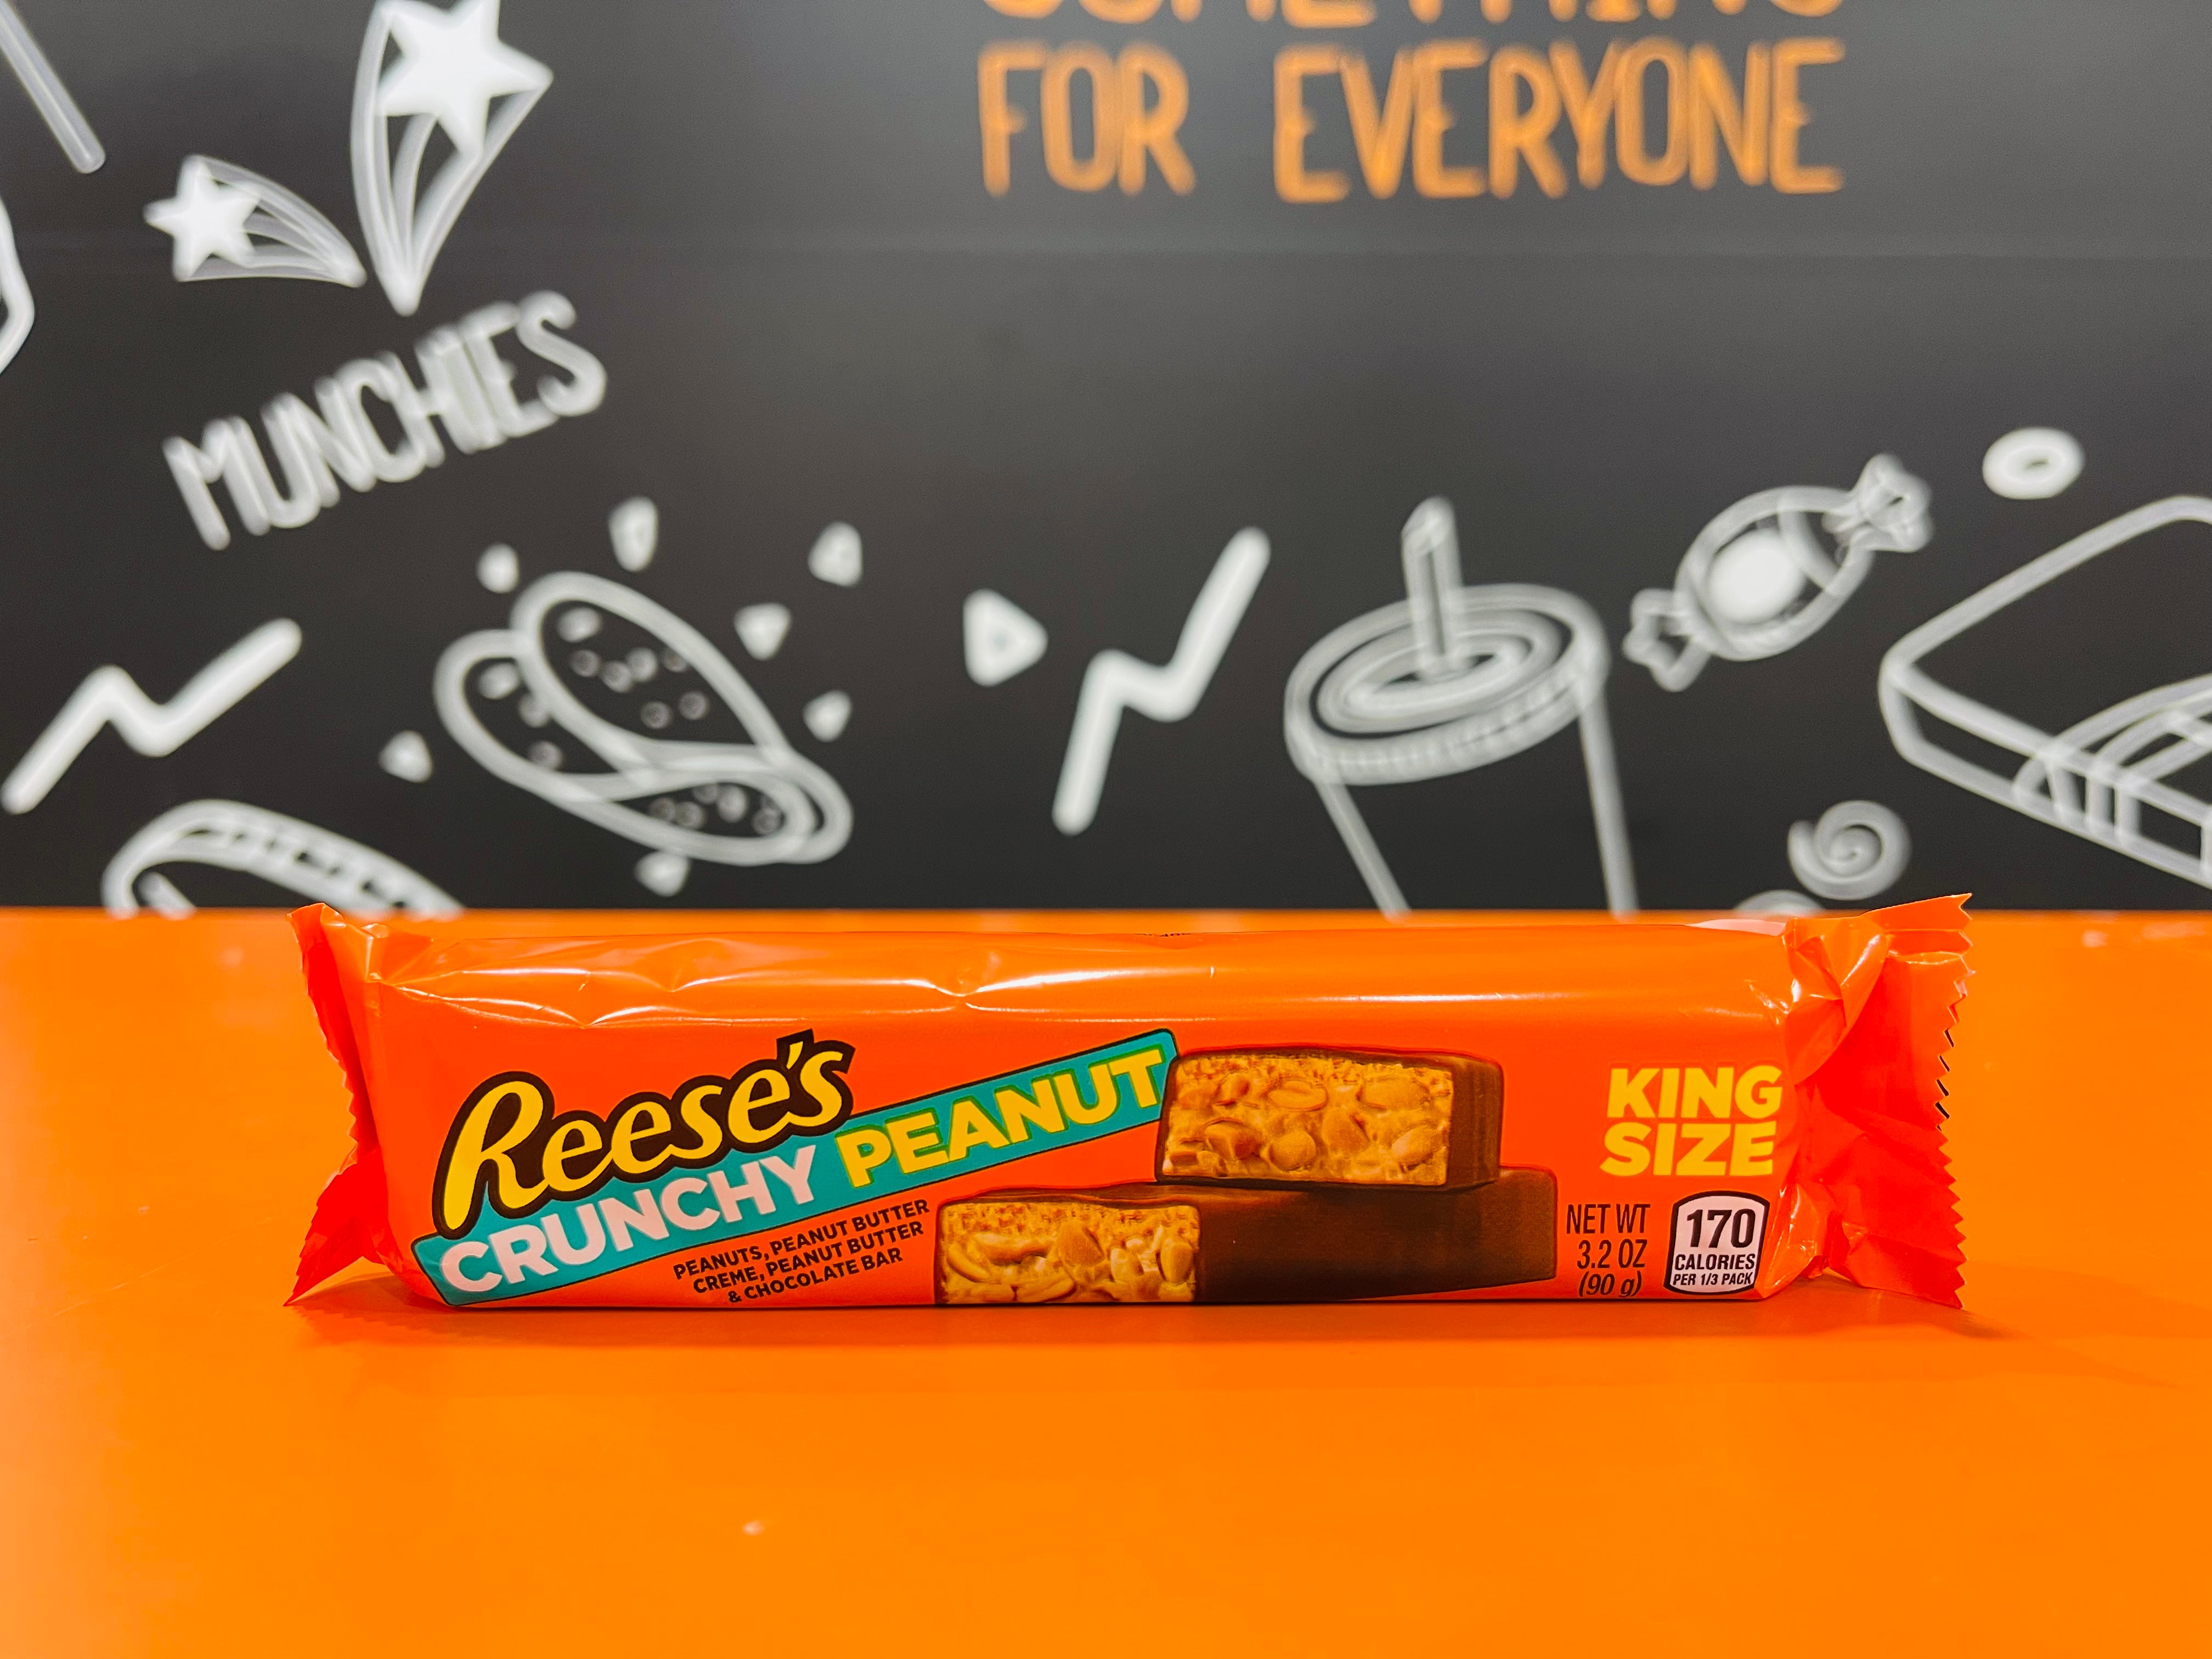 Reese’s Crunchy Peanut Butter